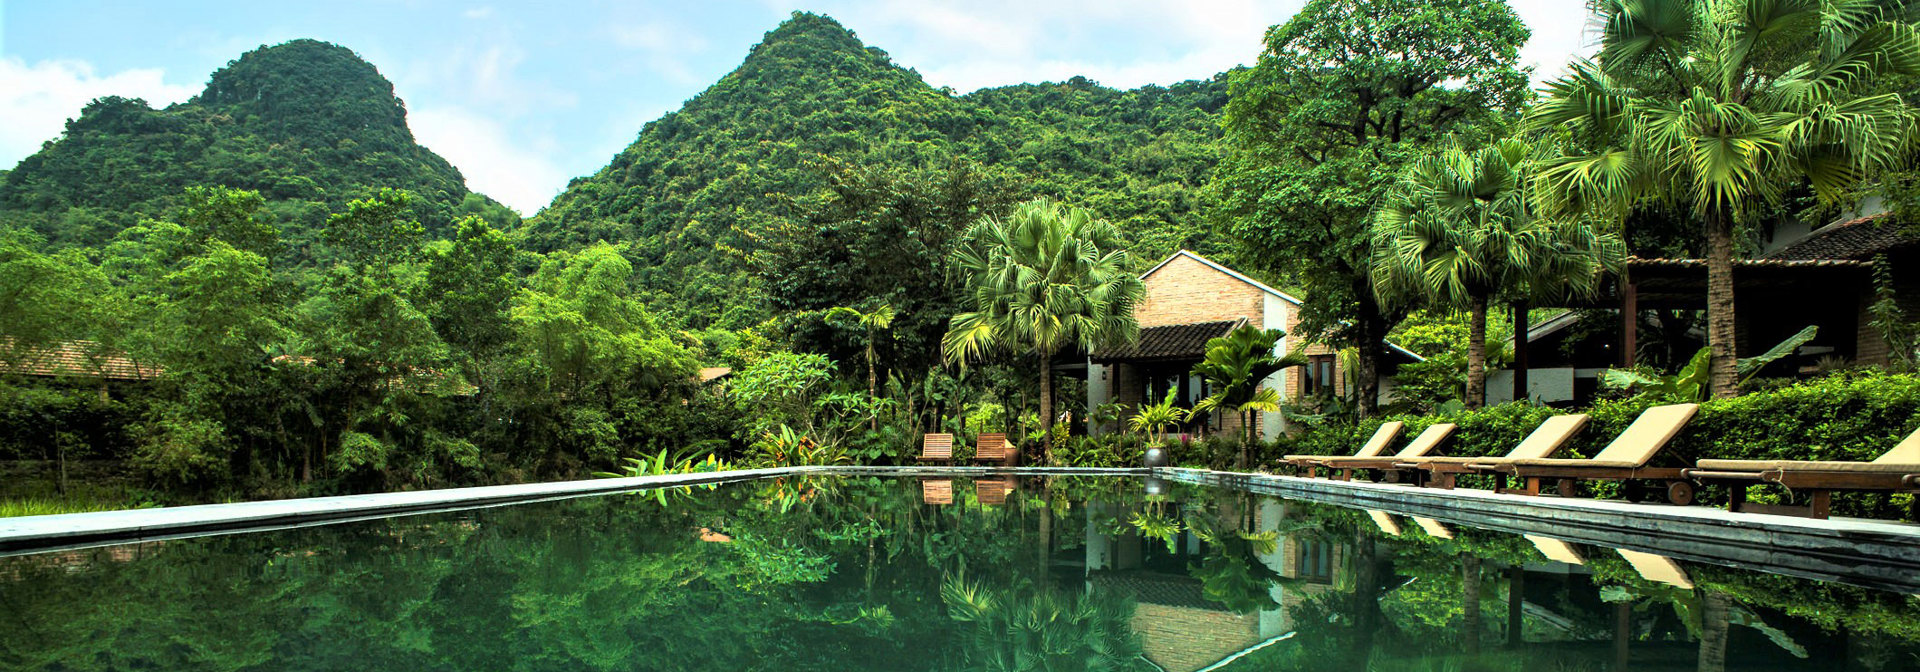 Nham Village Pool